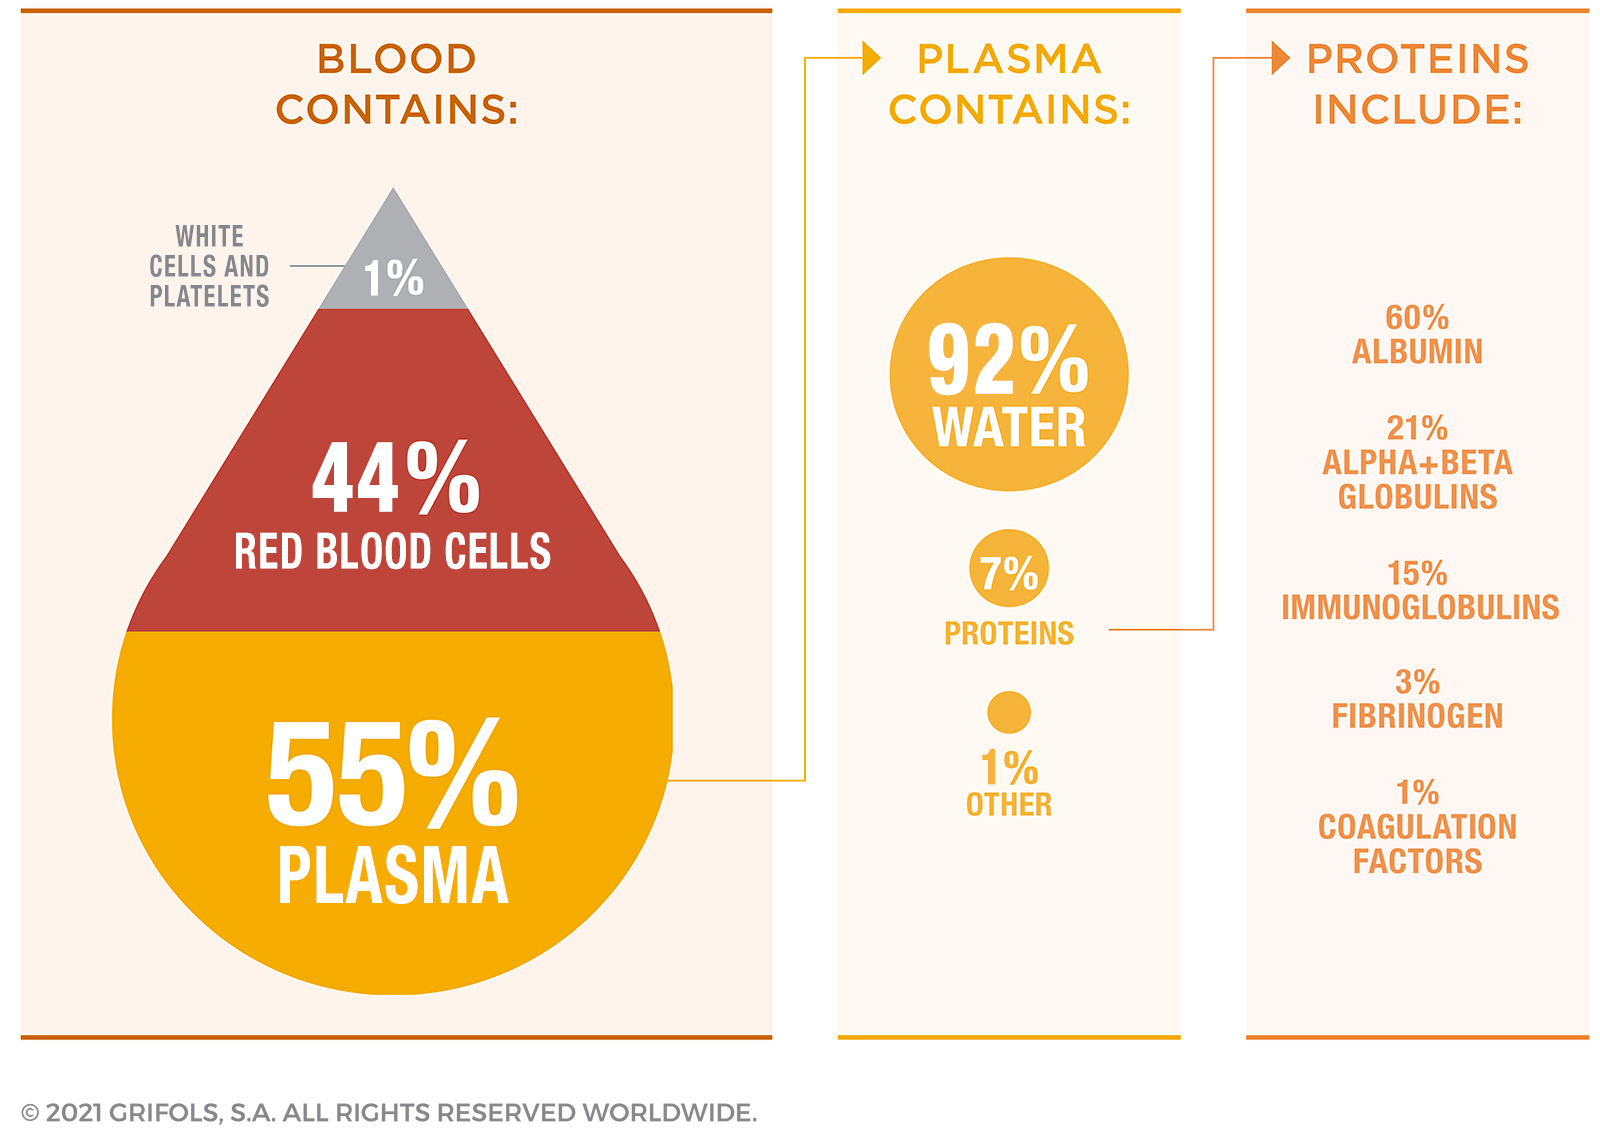 blood contains - plasma